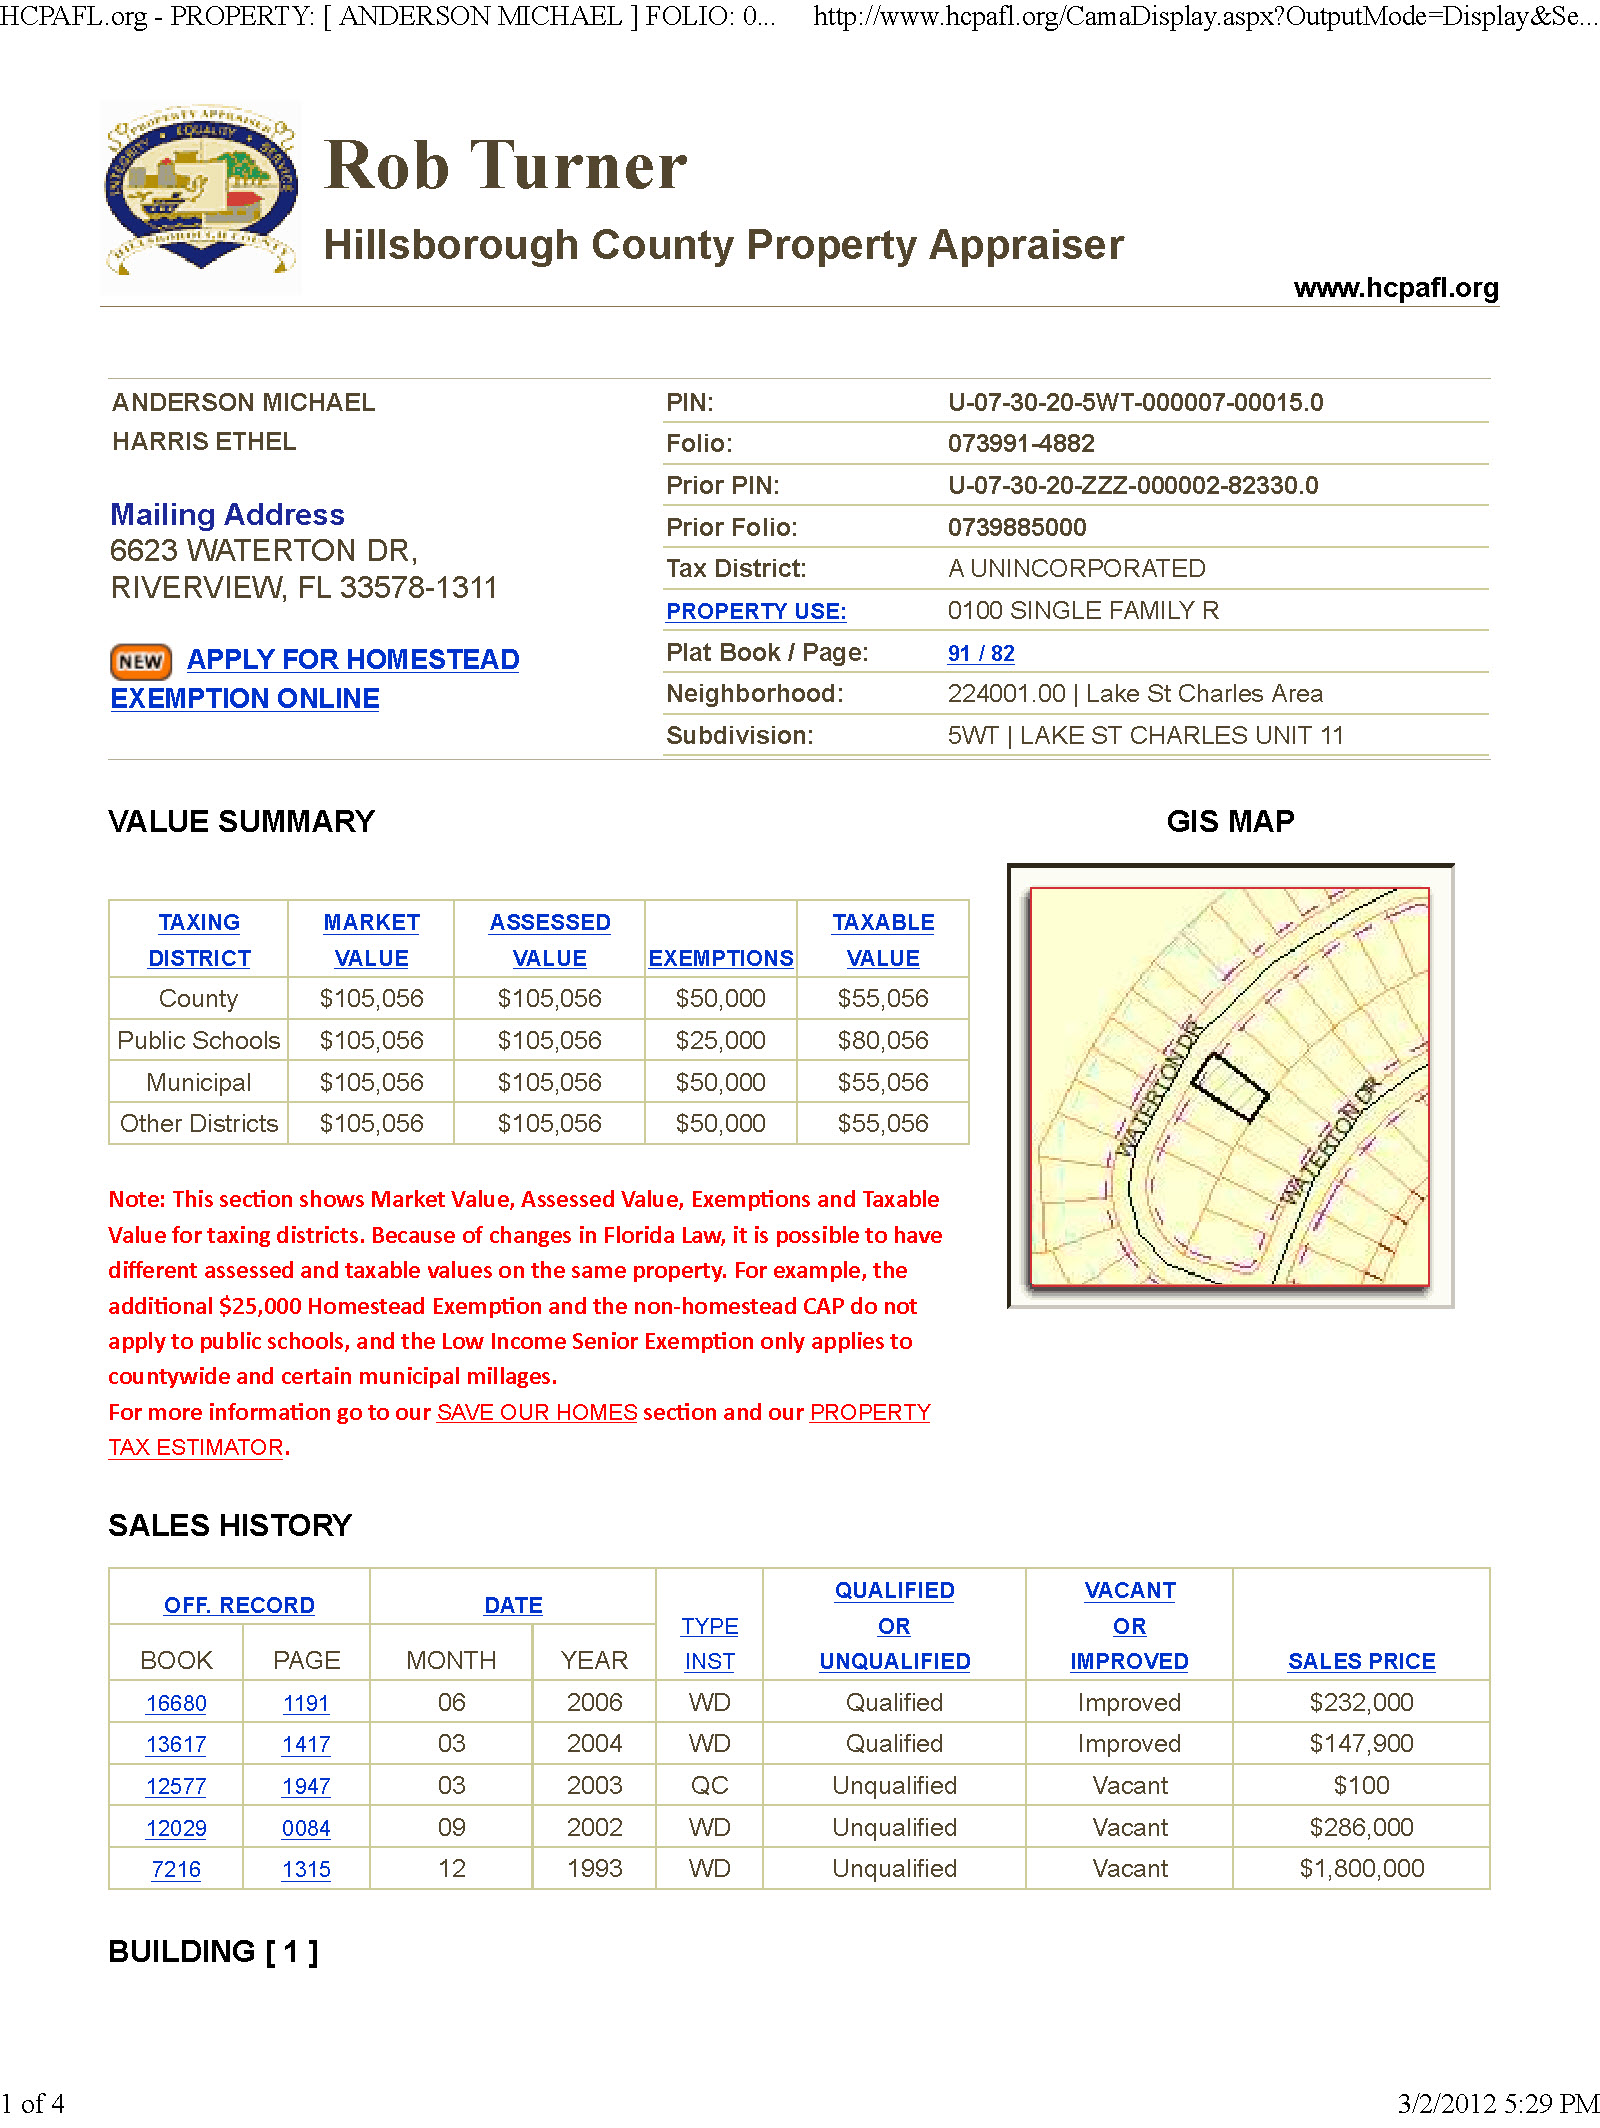 Copy of anderson ethel property tax info1.jpg